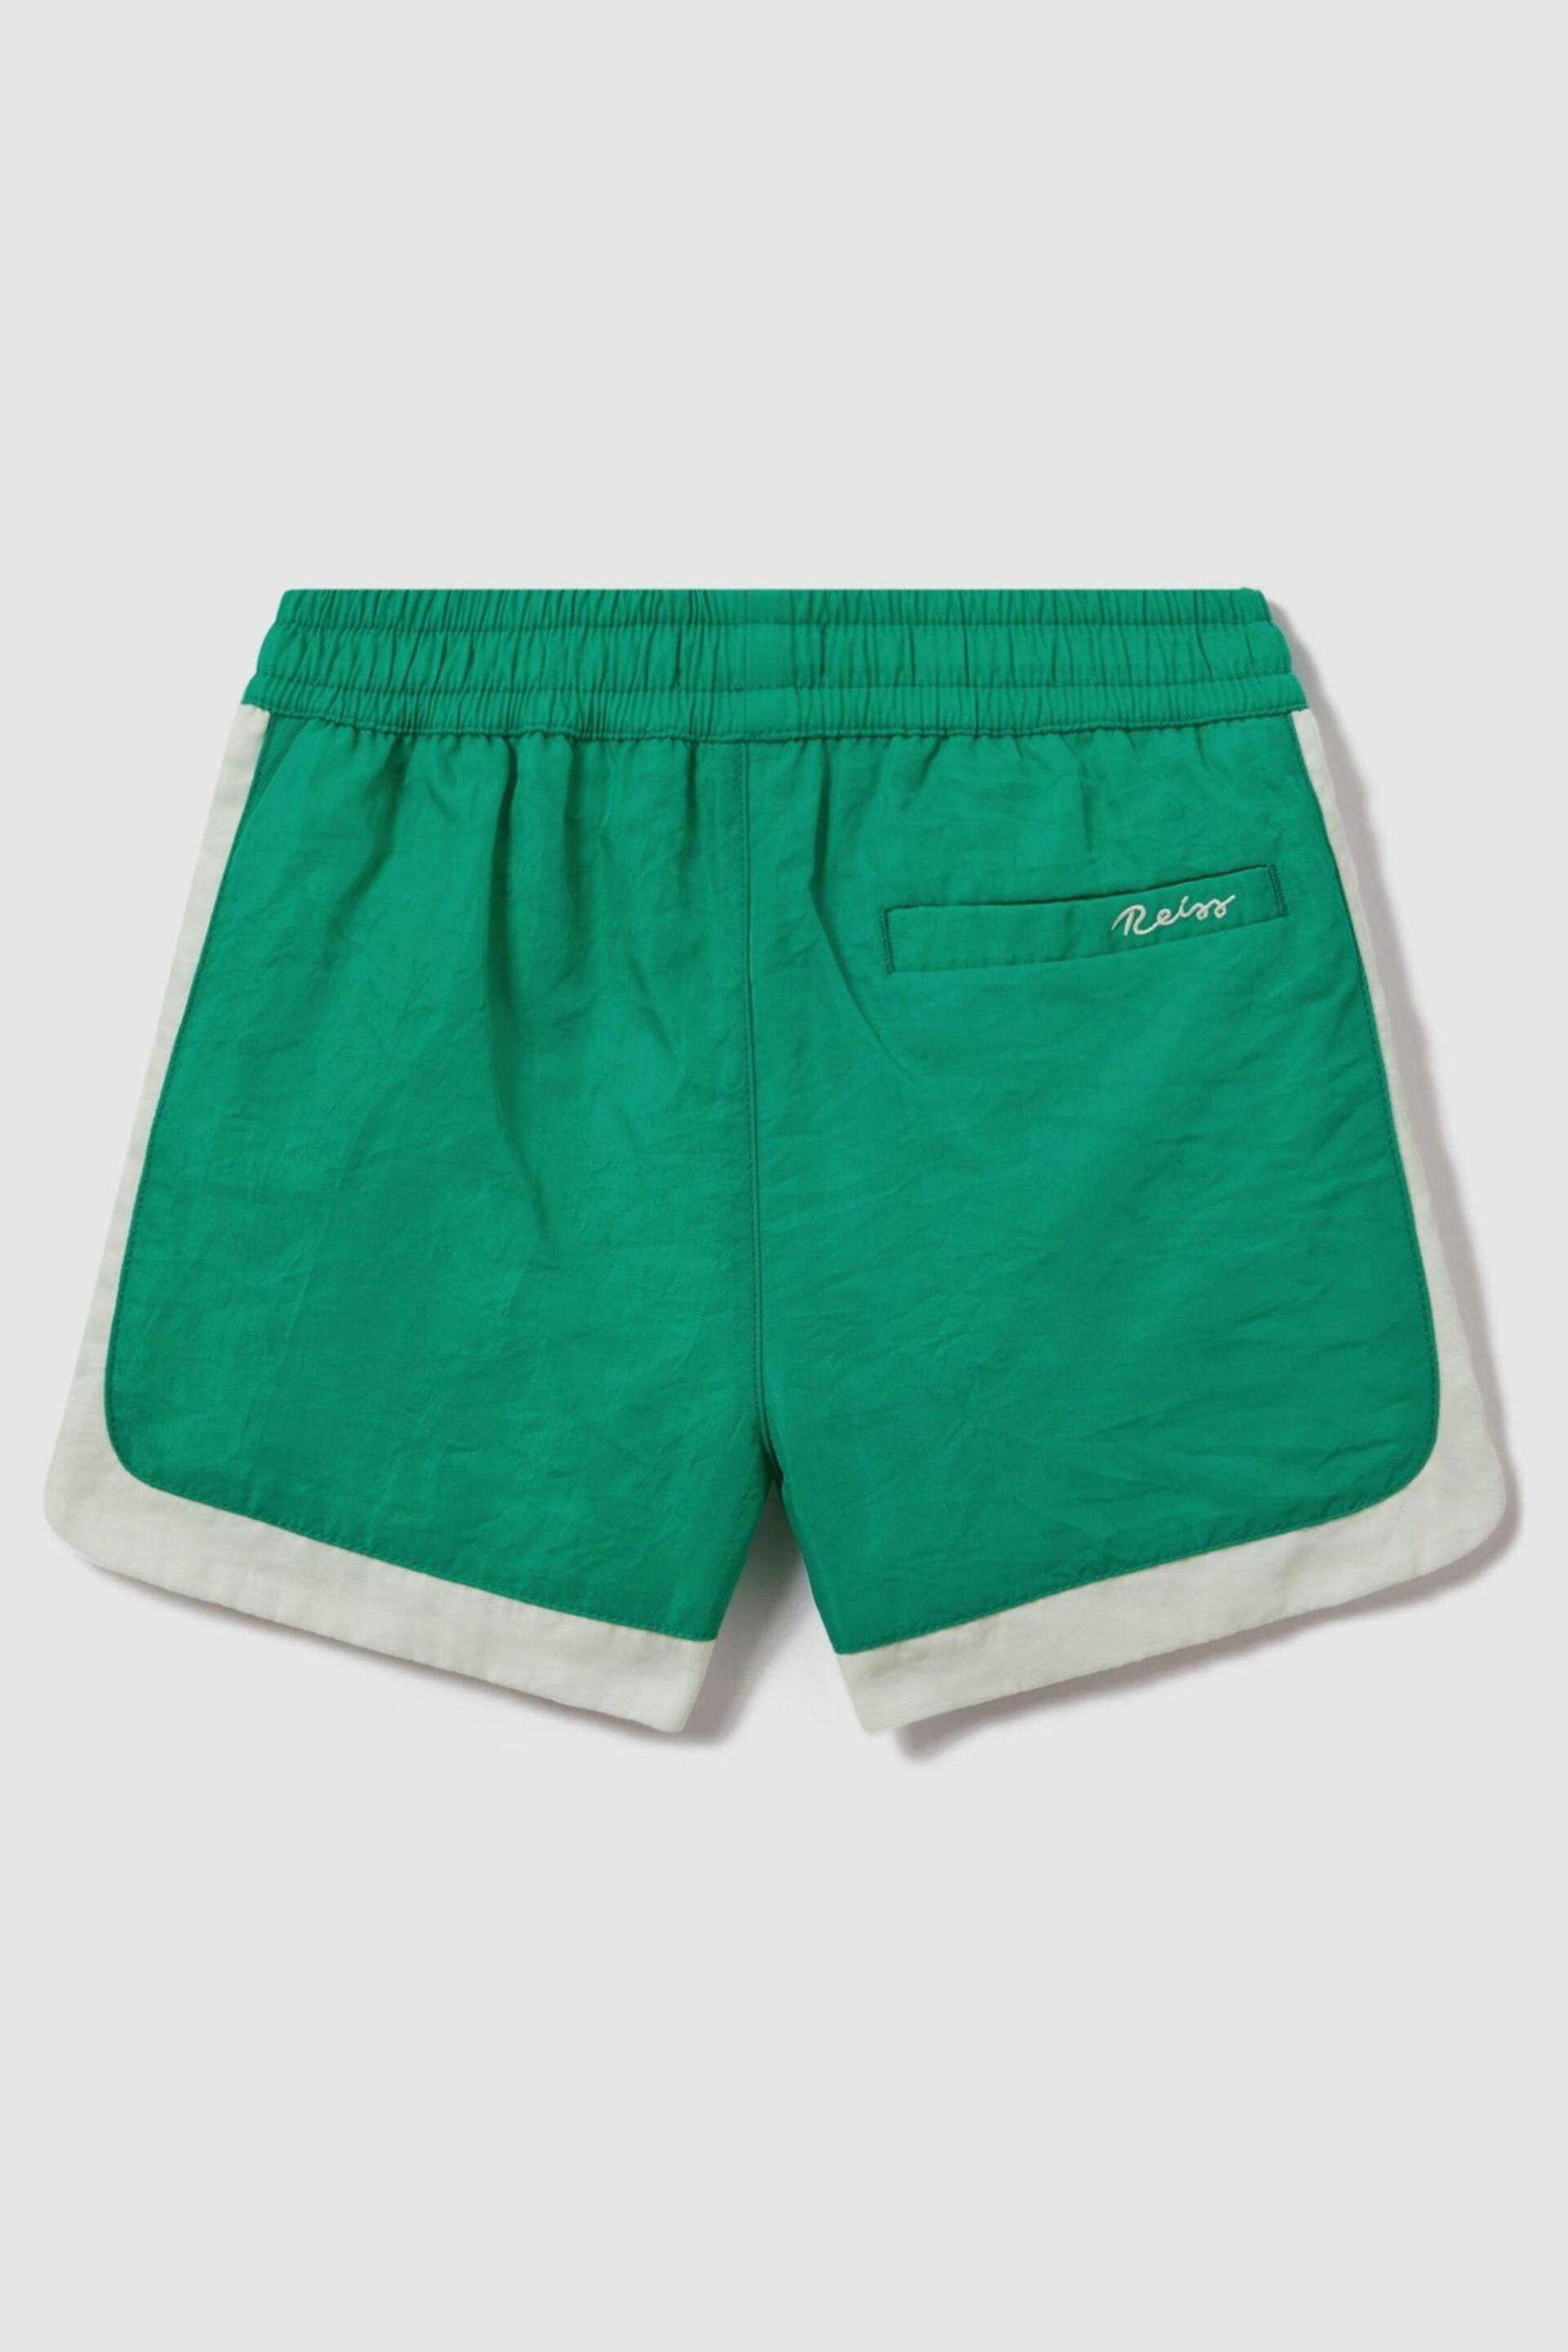 Reiss Bright Green/Ecru Surf Junior Contrast Drawstring Swim Shorts - Image 2 of 3